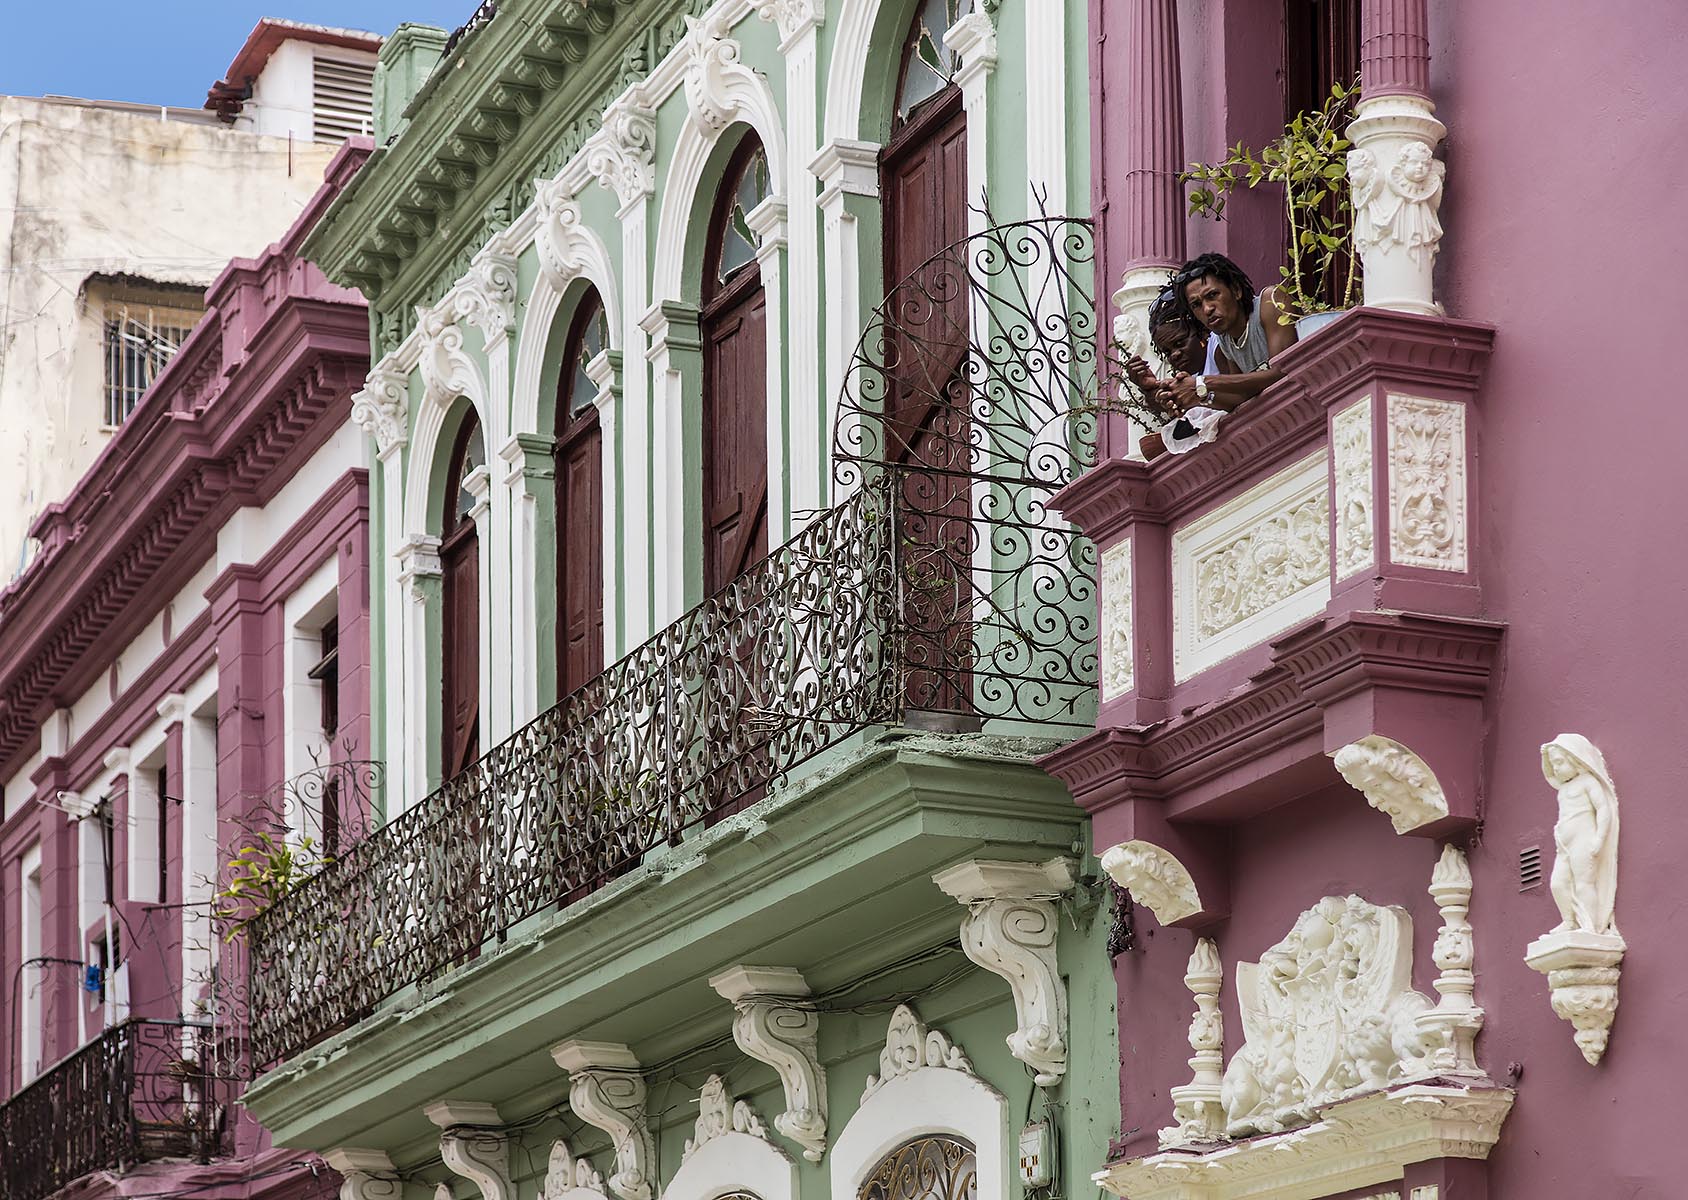 Renovated historical buildings in HABANA VIEJA - HAVANA, CUBA